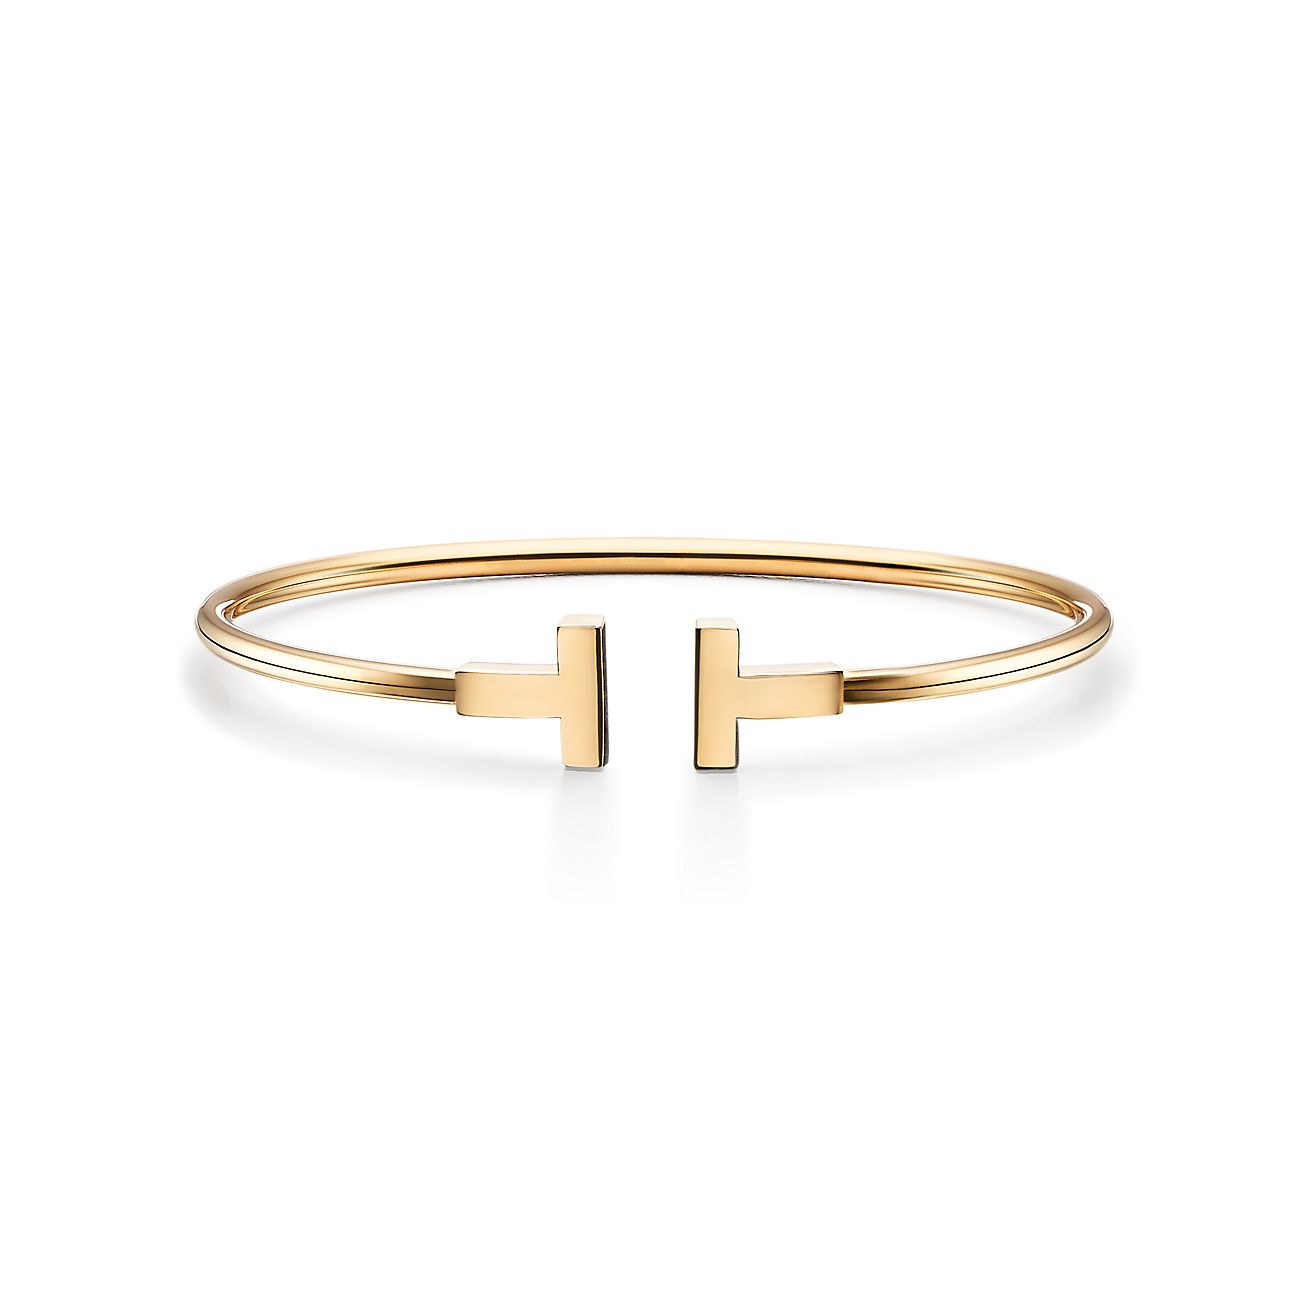 Tiffany T wire bracelet in 18k gold, medium.| Tiffany & Co.